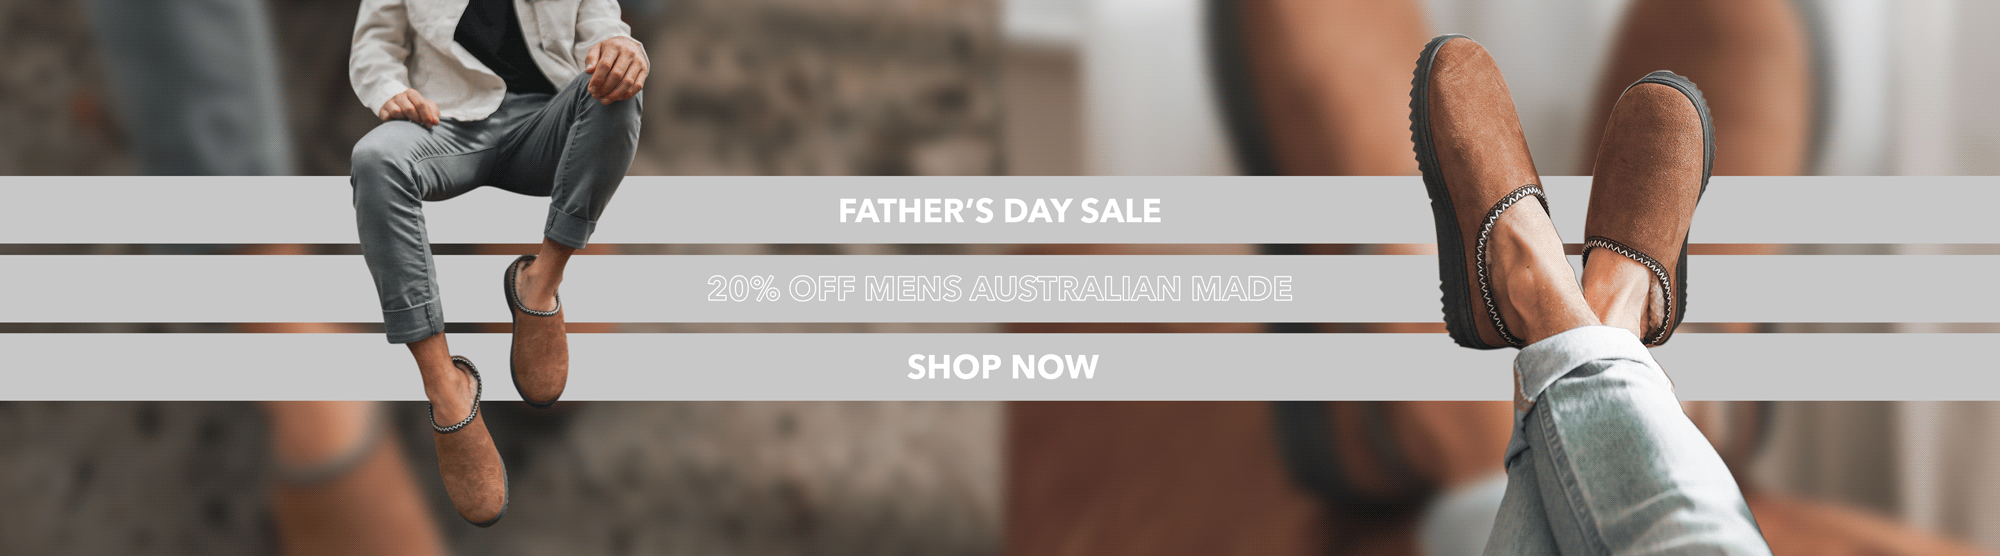 EMU Australia Father's Day sale - 20% Off Mens Australian Made